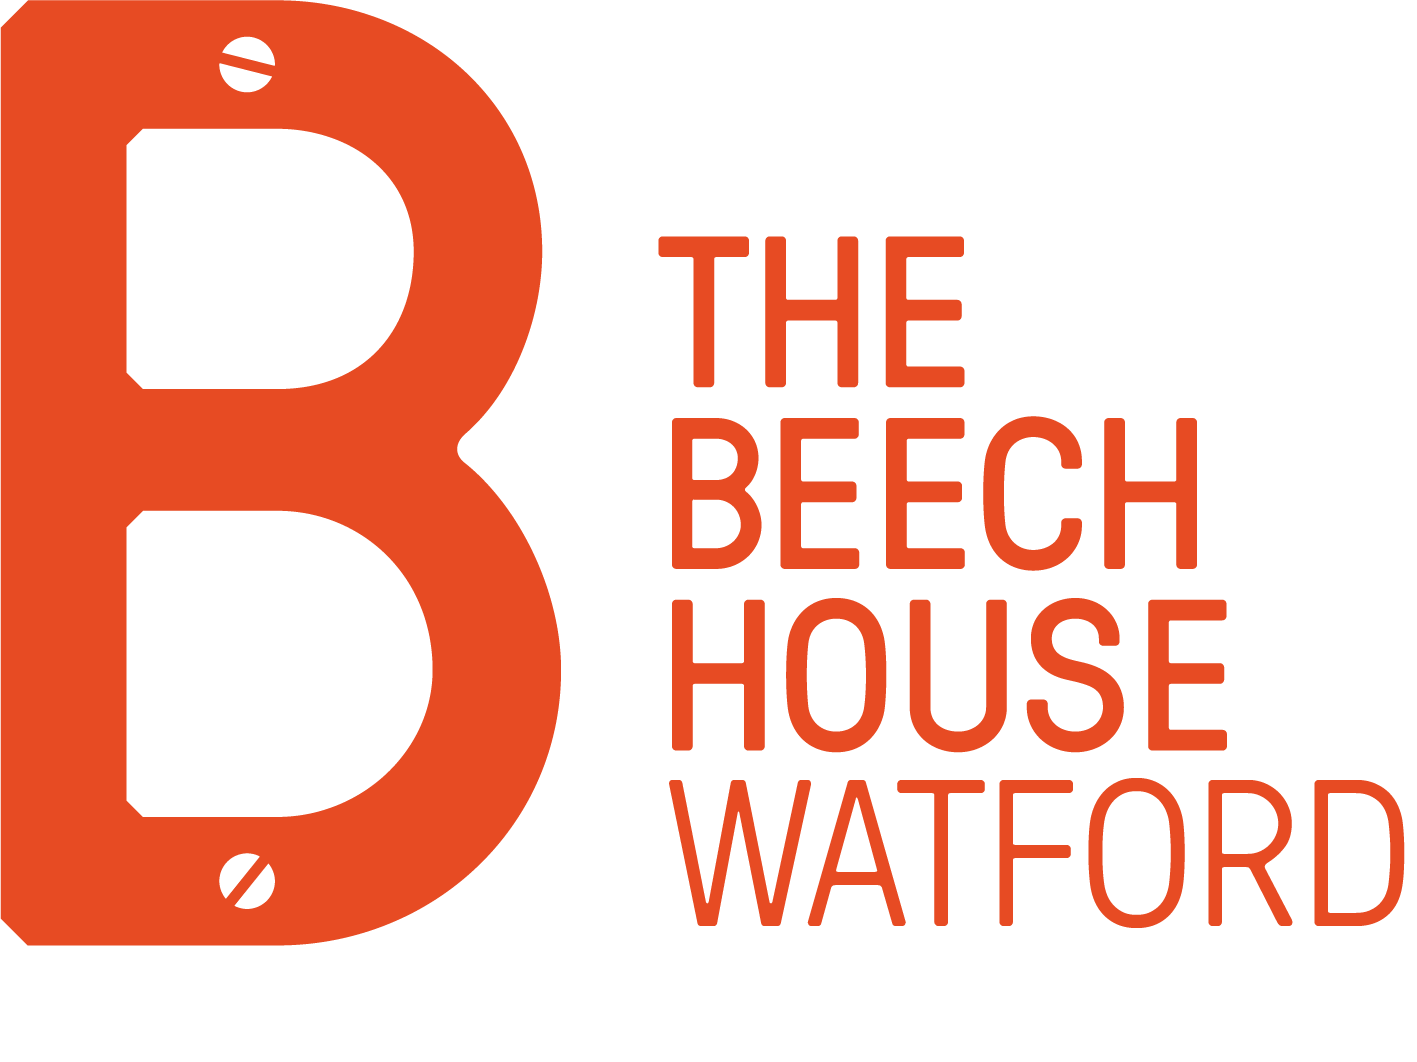 The Beech House Watford